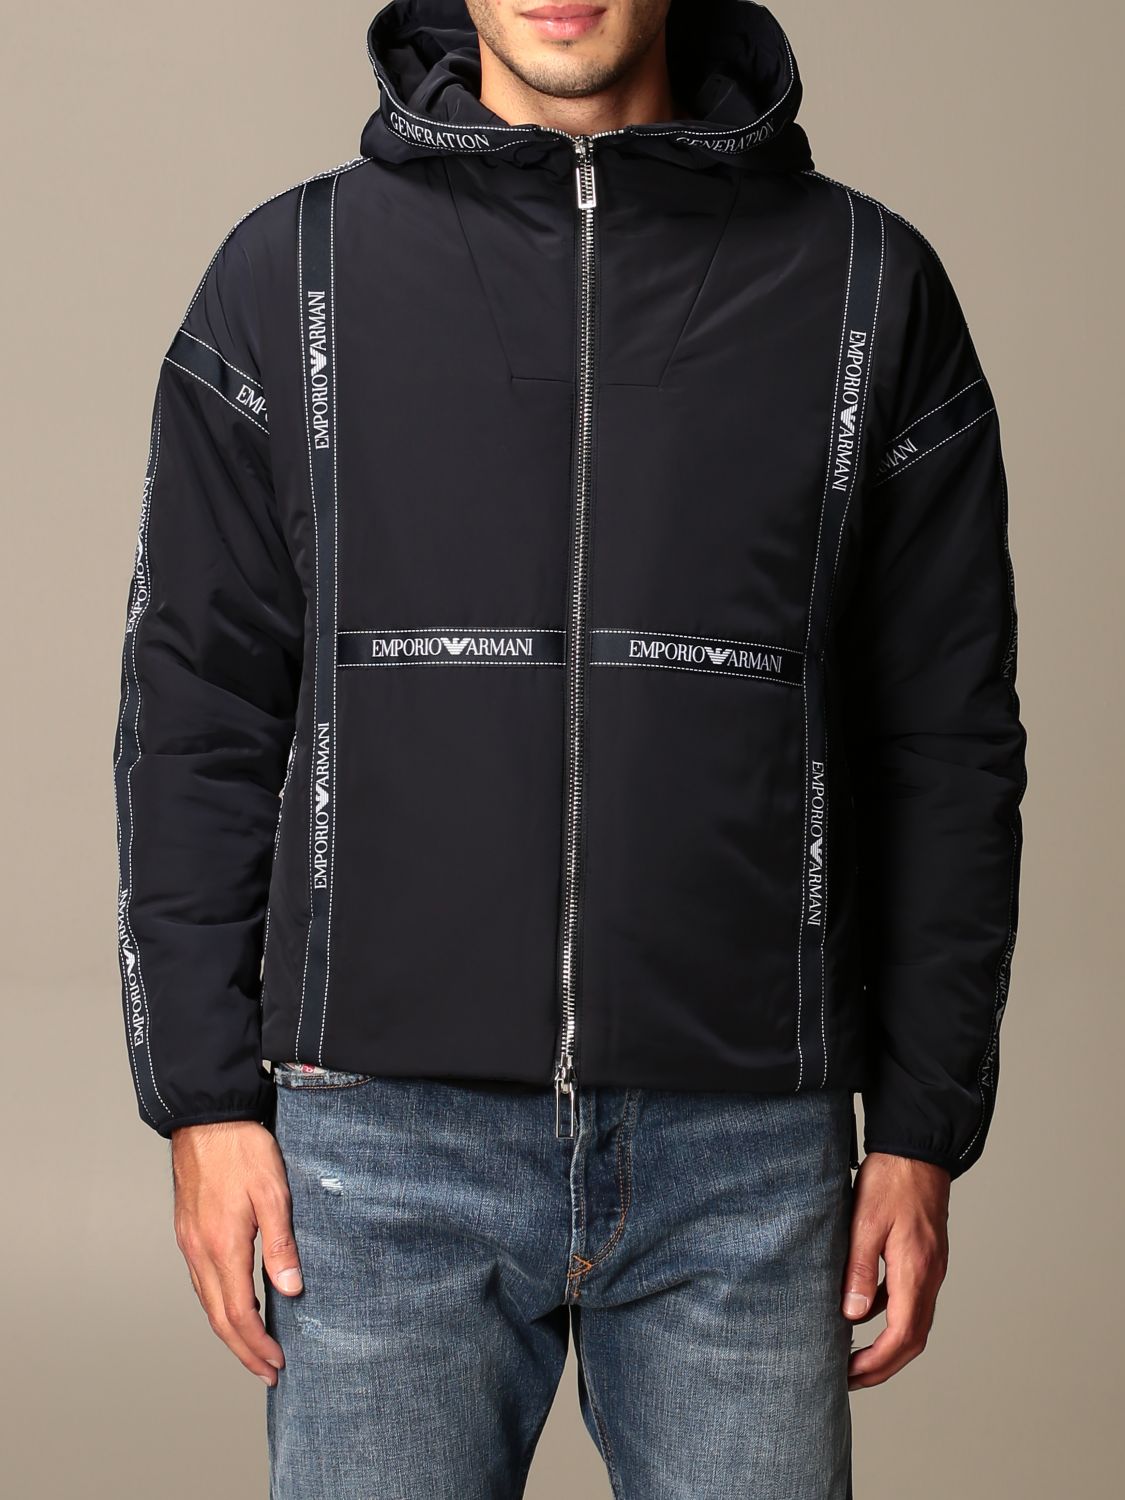 Emporio Armani Outlet: jacket with logoed bands - Blue | Emporio Armani ...